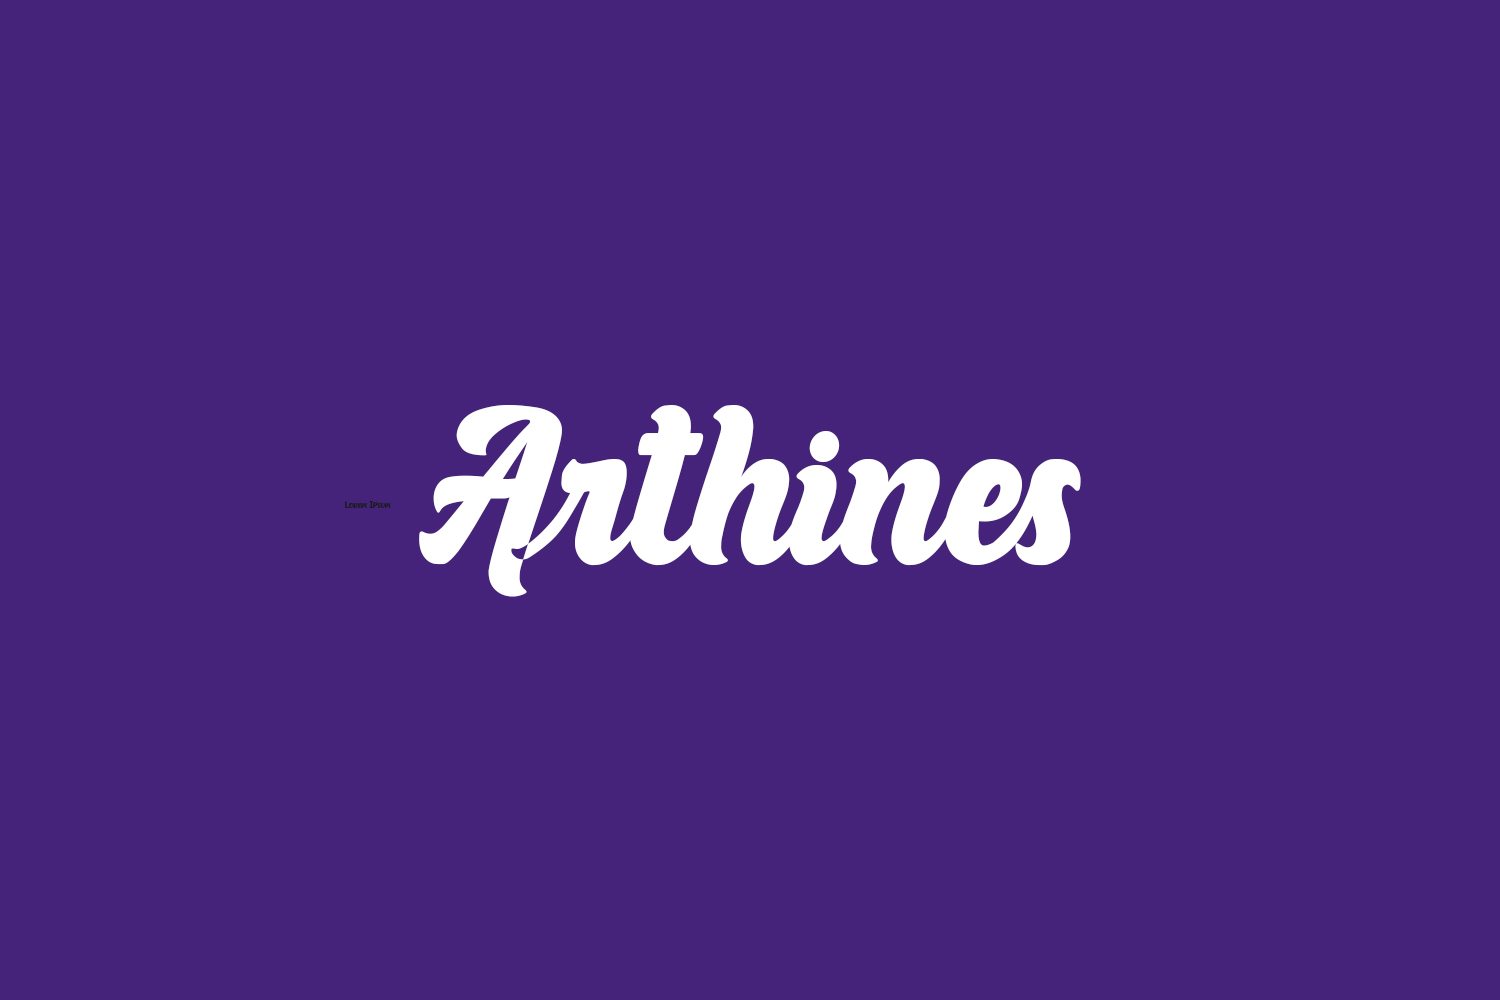 Arthines Free Font